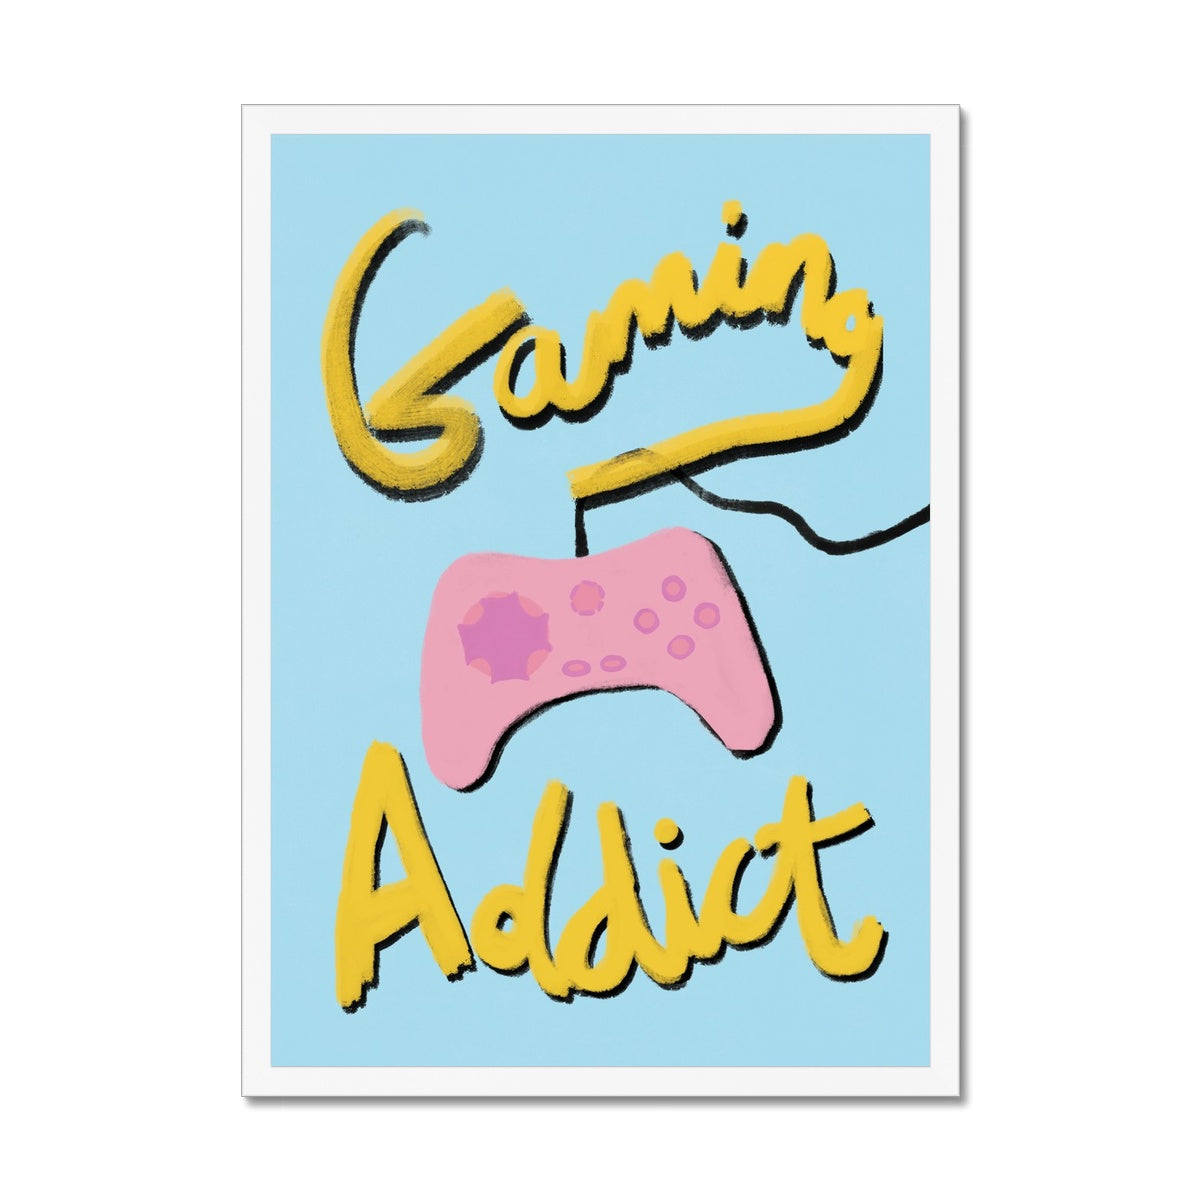 Gaming Addict Print - Light Blue, Yellow, Pink Framed Print